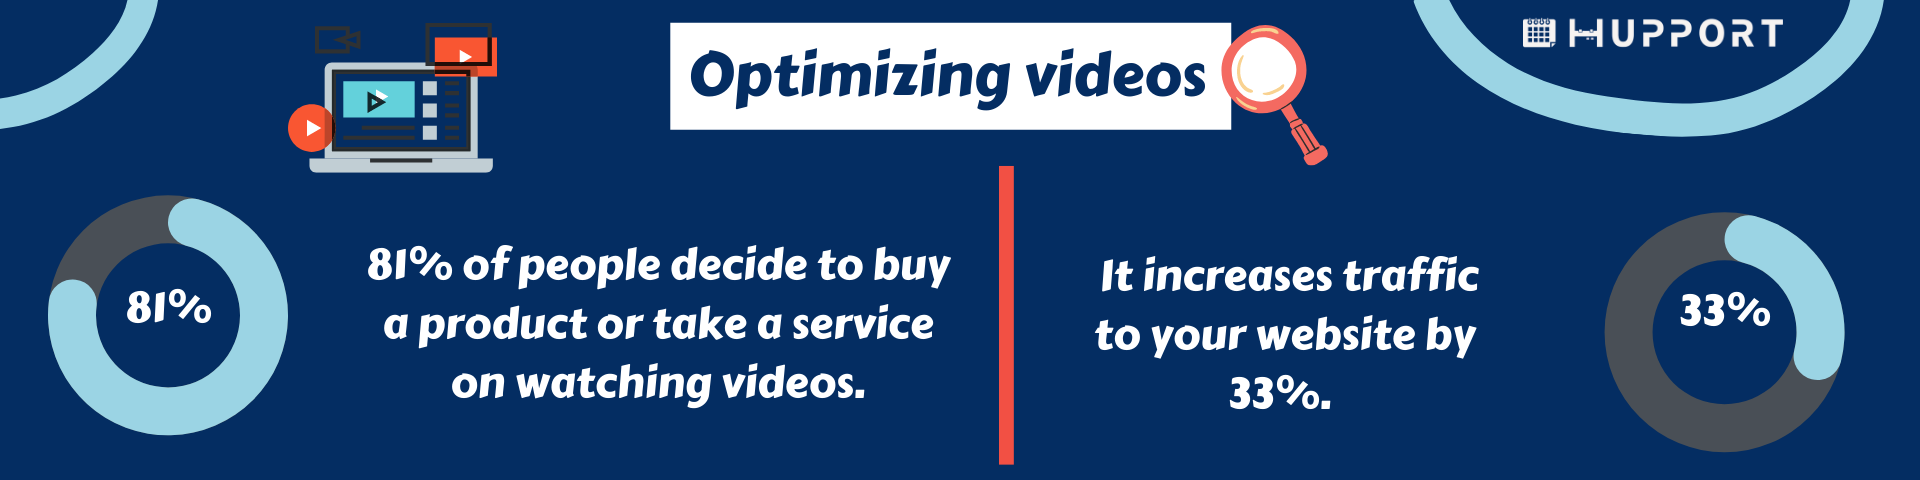 Optimizing videos